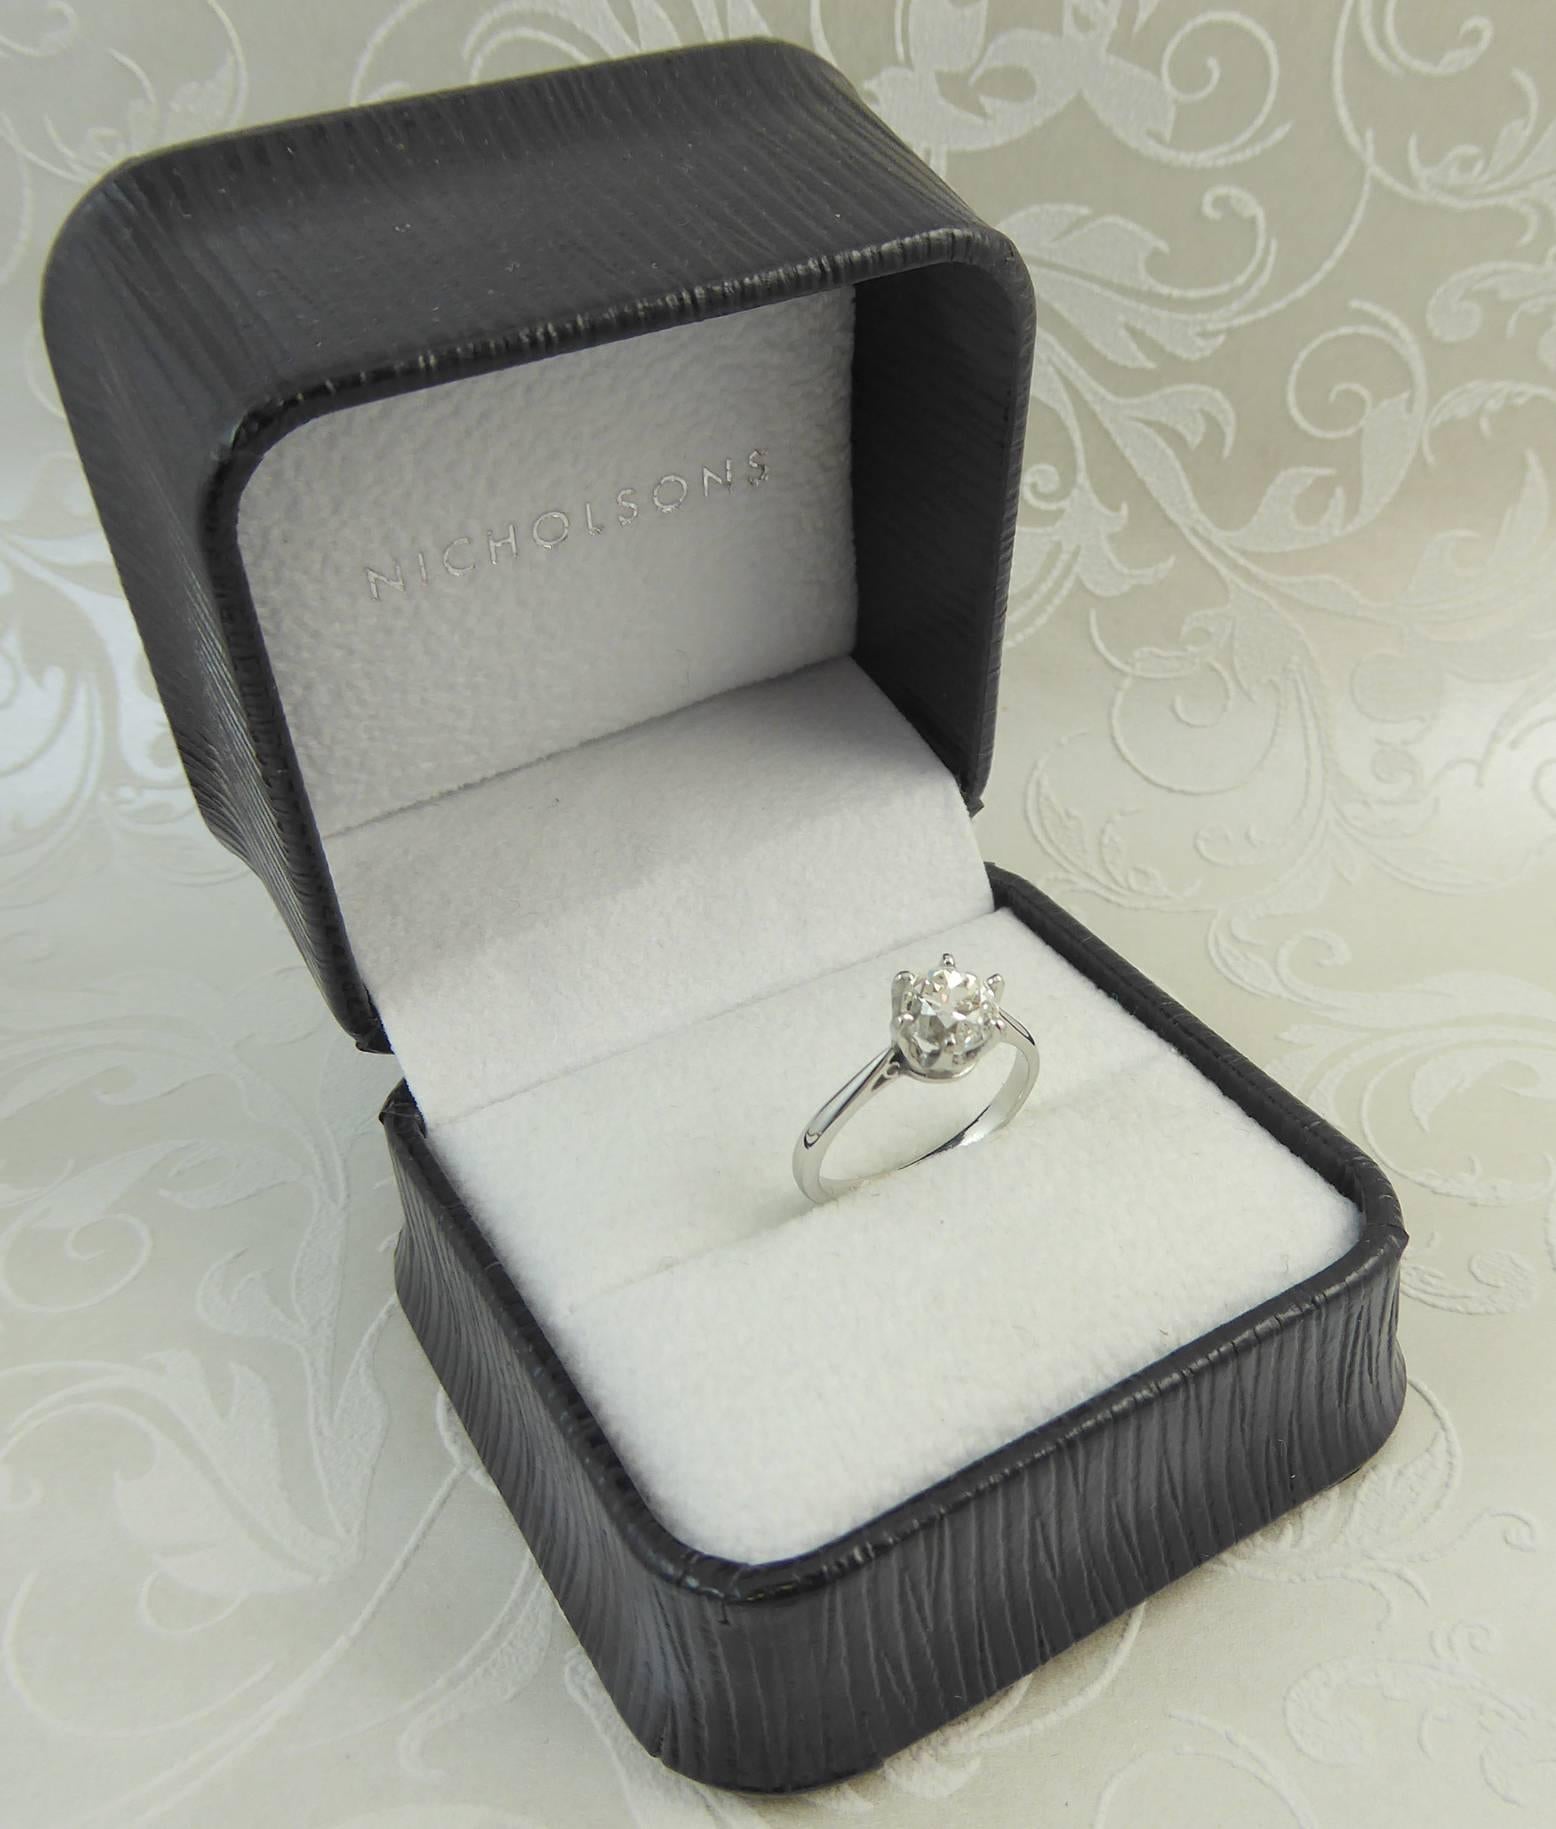 Oval Cut Vintage 1.02 Carat Old European Cut Diamond Solitaire Engagement Ring, Platinum